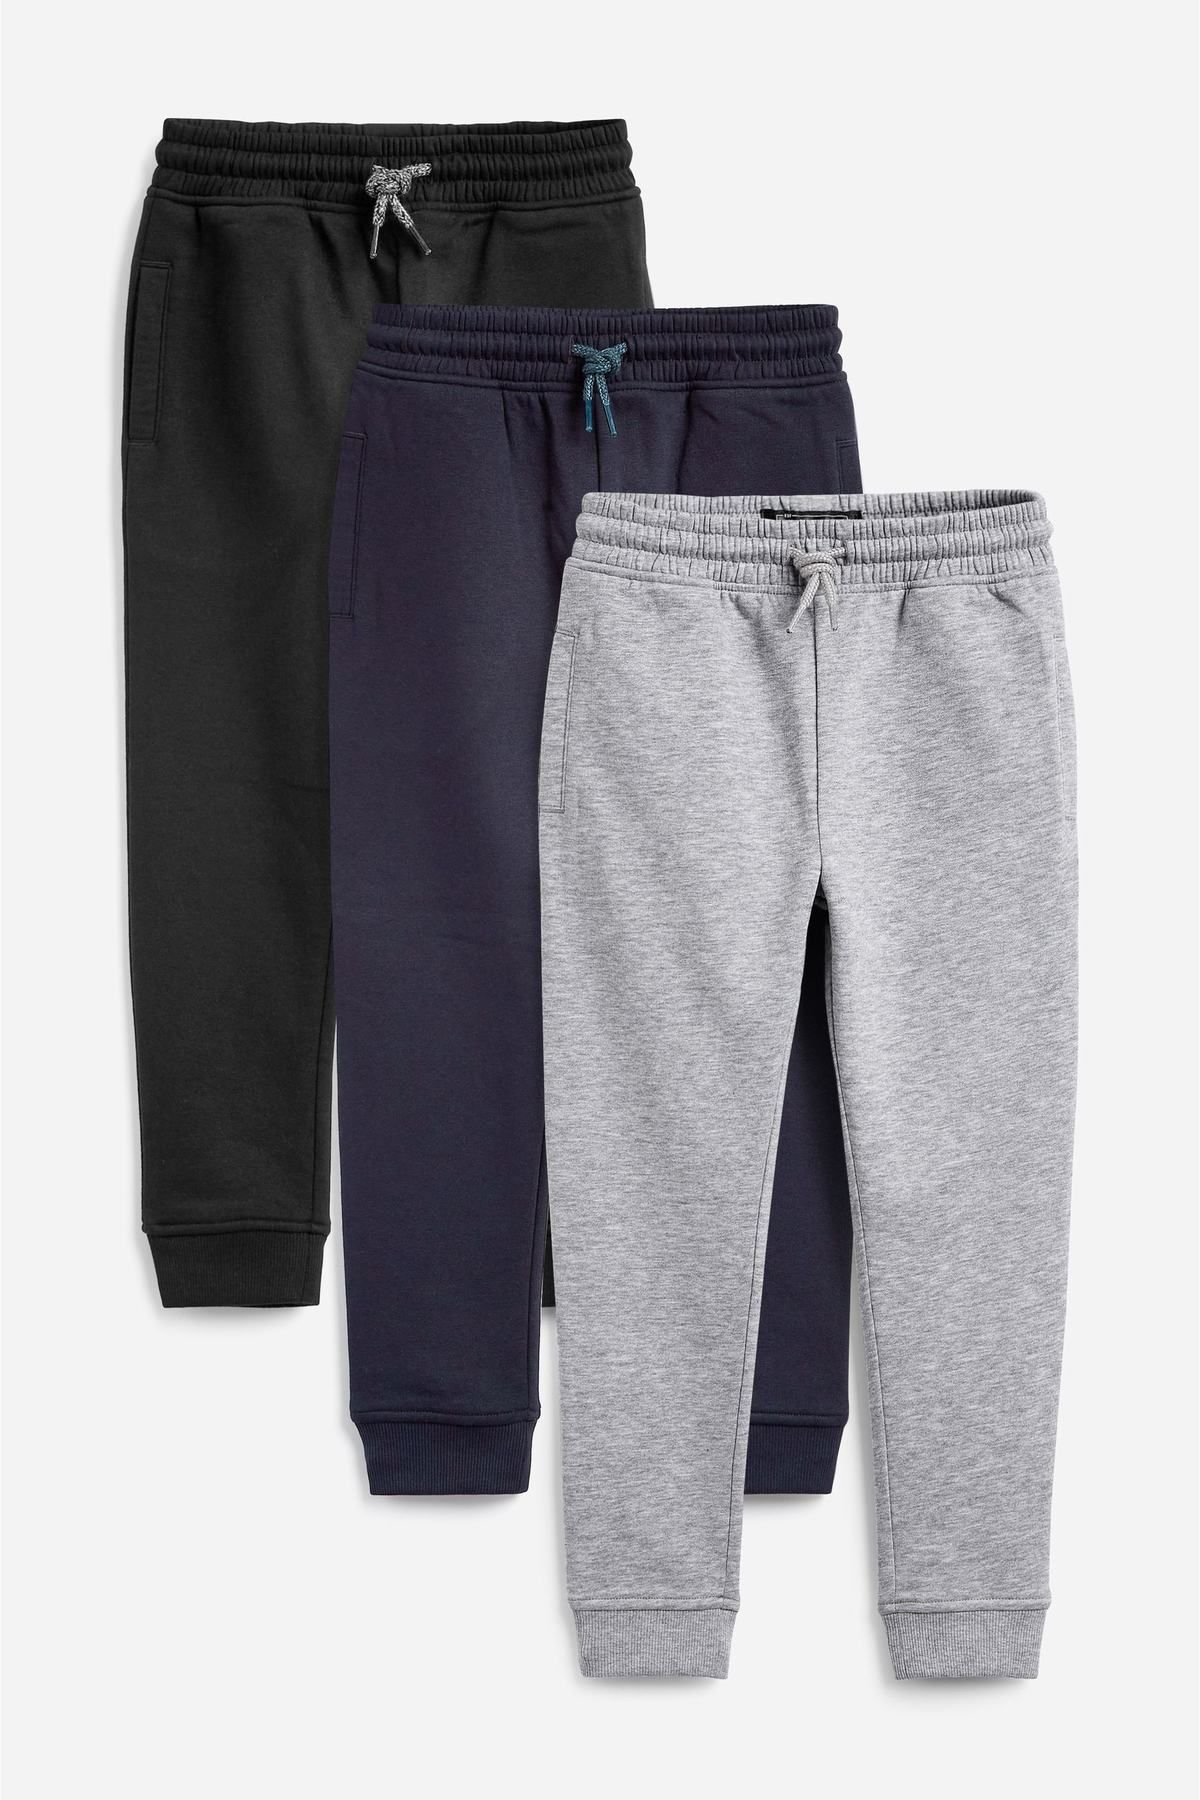  Coney Island Boyâ€ Sweatpants â€“ 4 Pack Active Fleece Joggers  (Size: 4-16), Size 4, Black/Charcoal/Heather Grey/Navy : Clothing, Shoes &  Jewelry